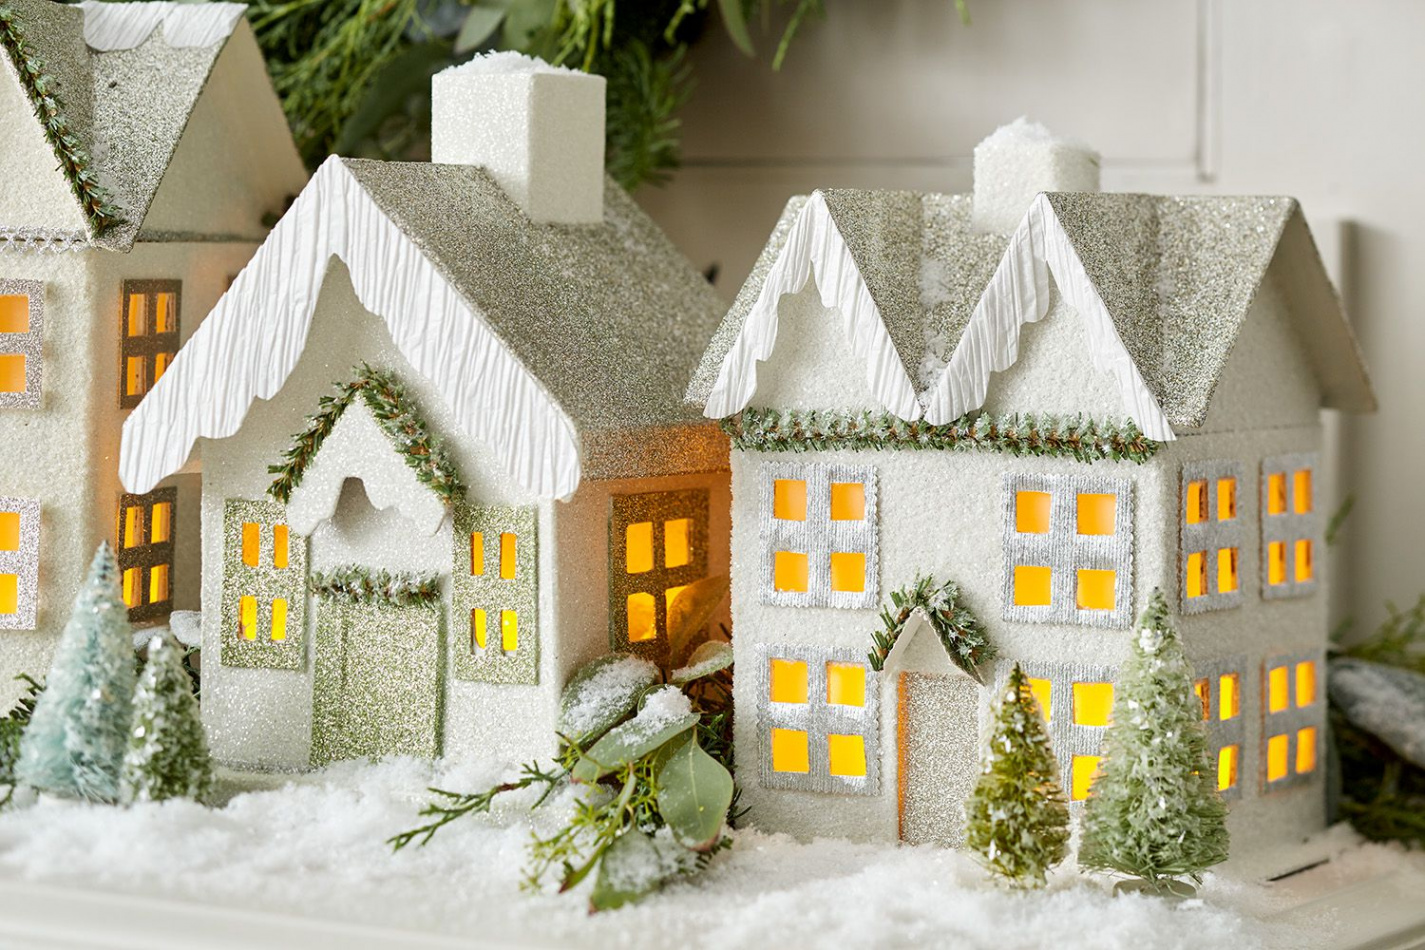 Nostalgic Christmas Village Ideas for Your Holiday Mantel